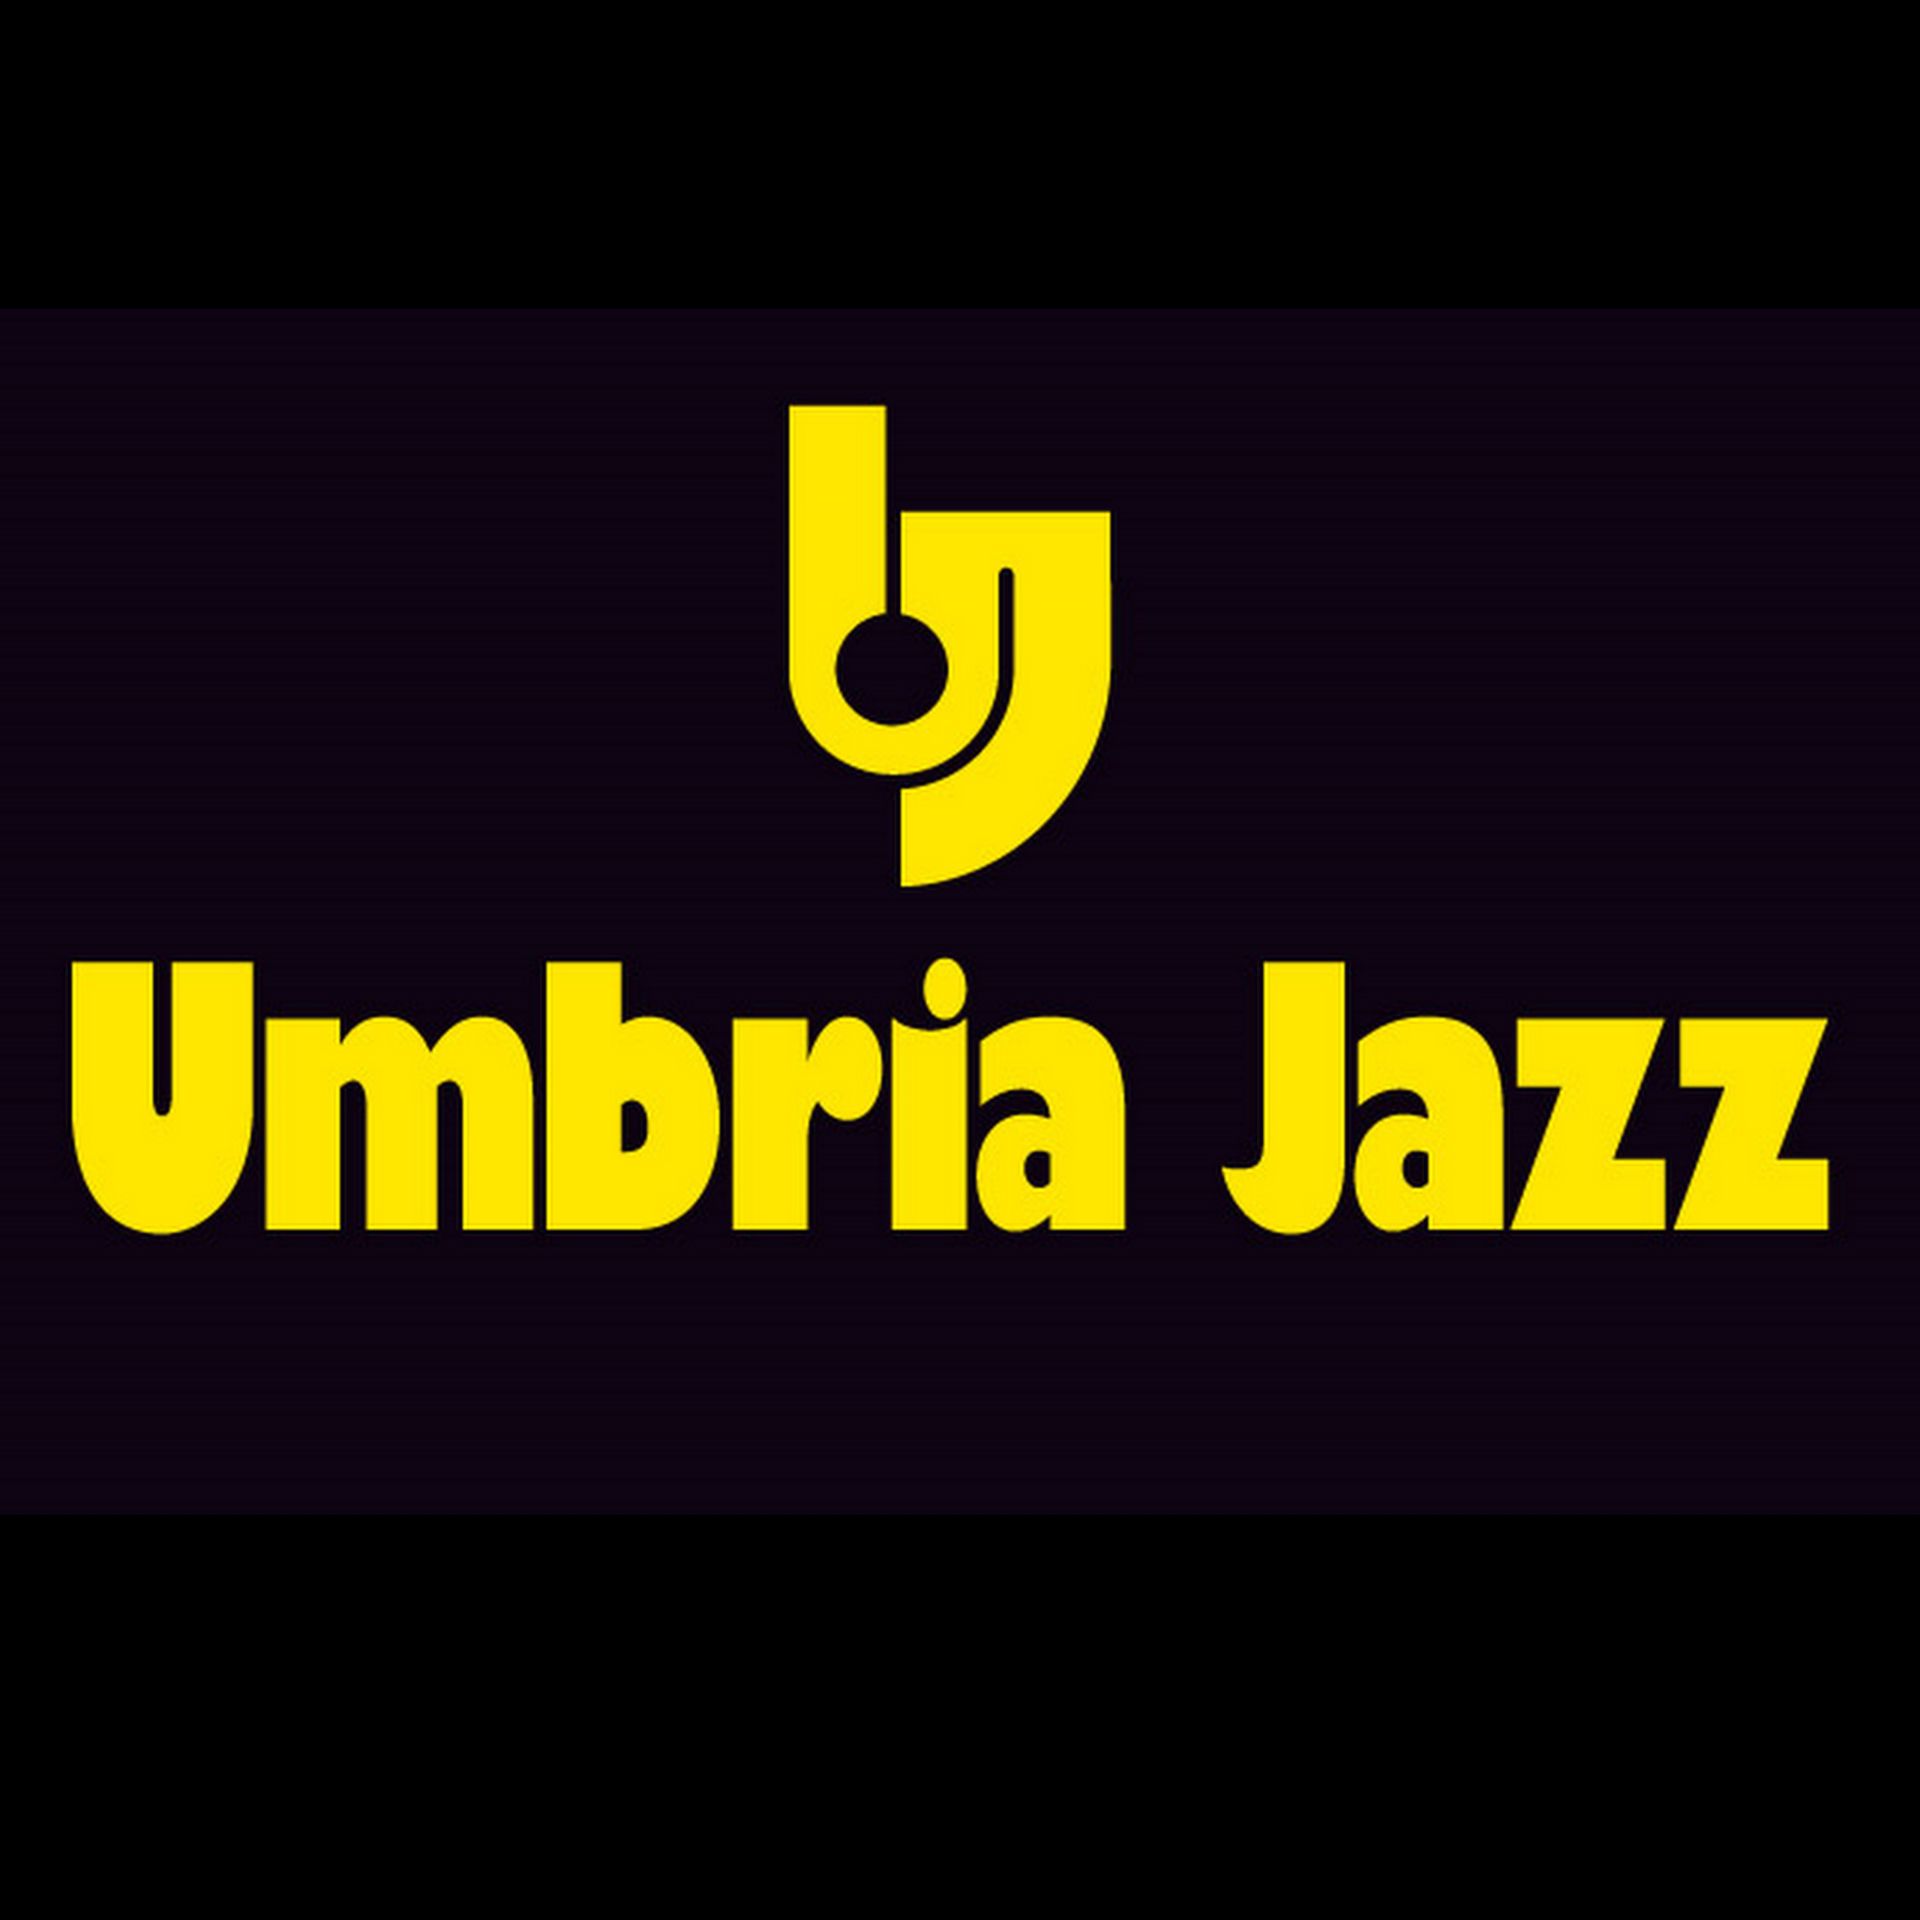 Fonte: Umbria Jazz